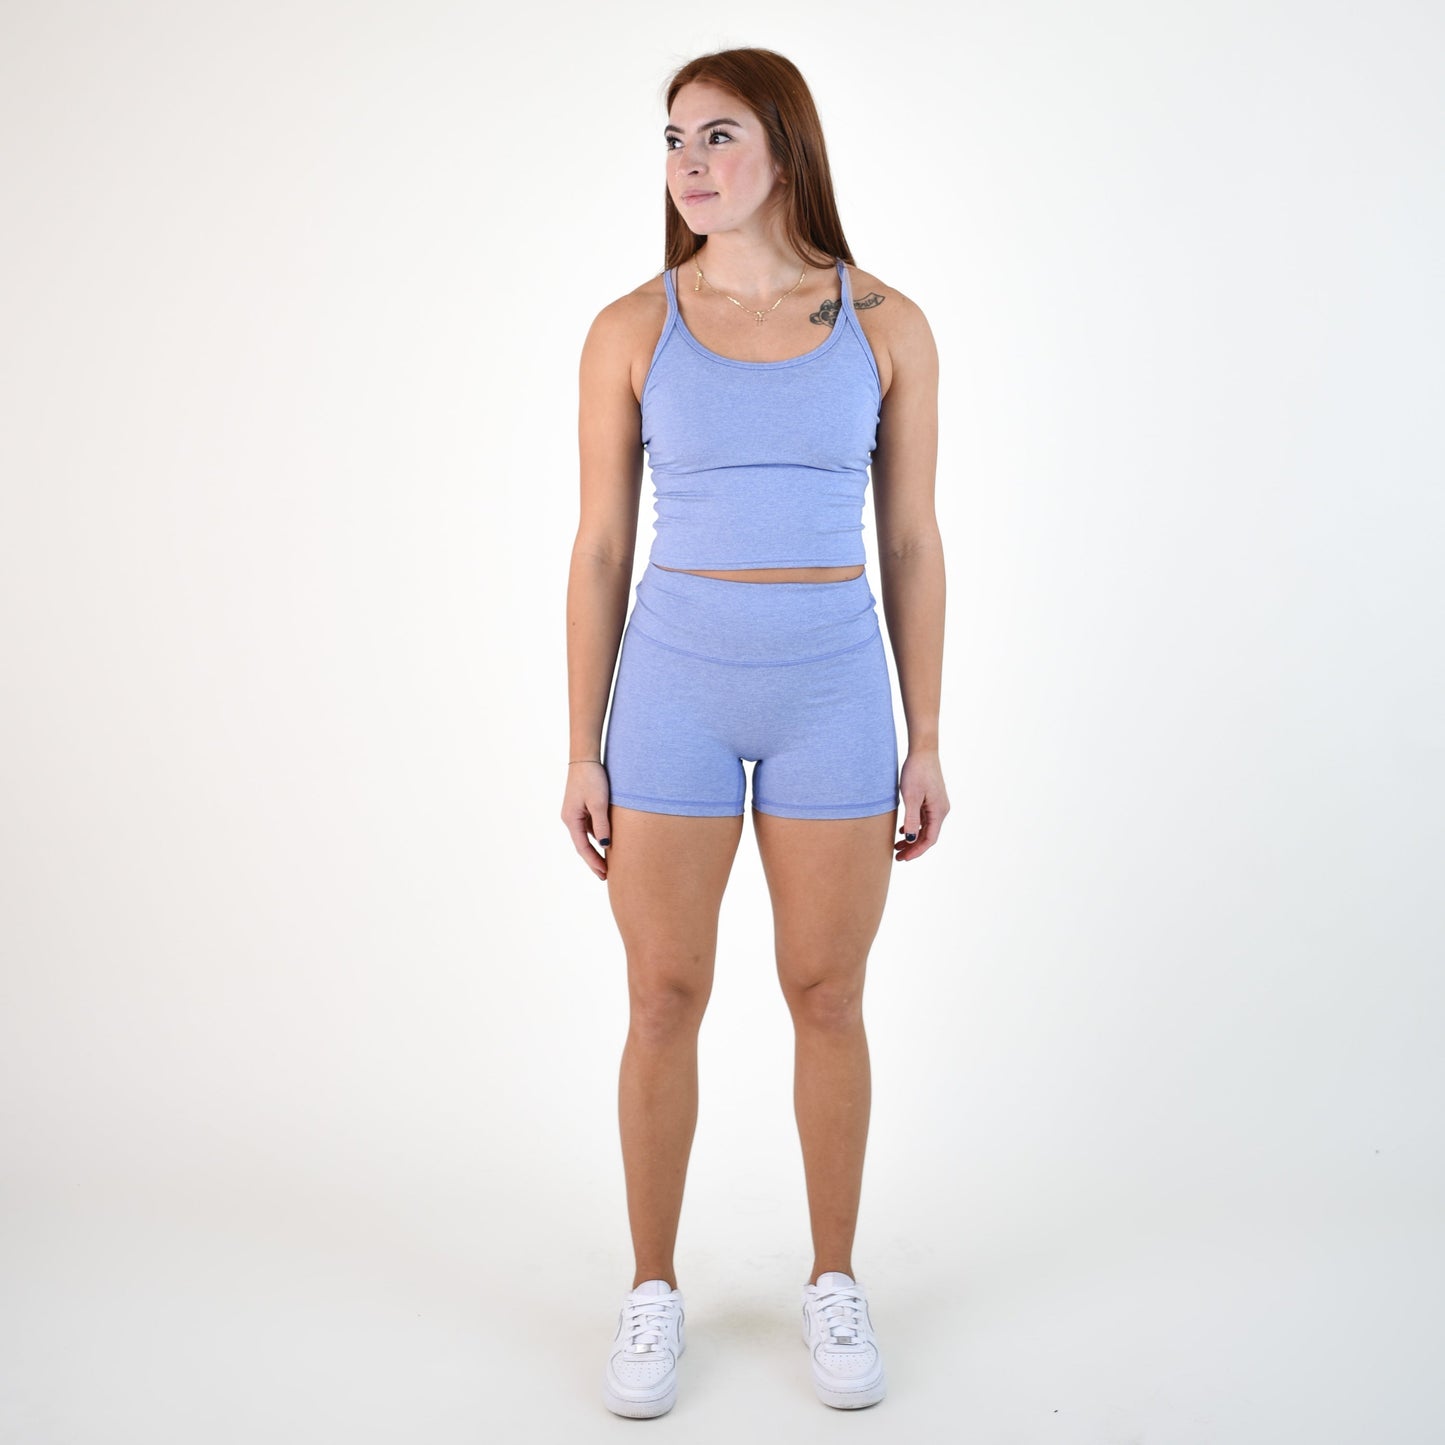 FLEO Heather Zen Blue Shorts (Ascend NFS)